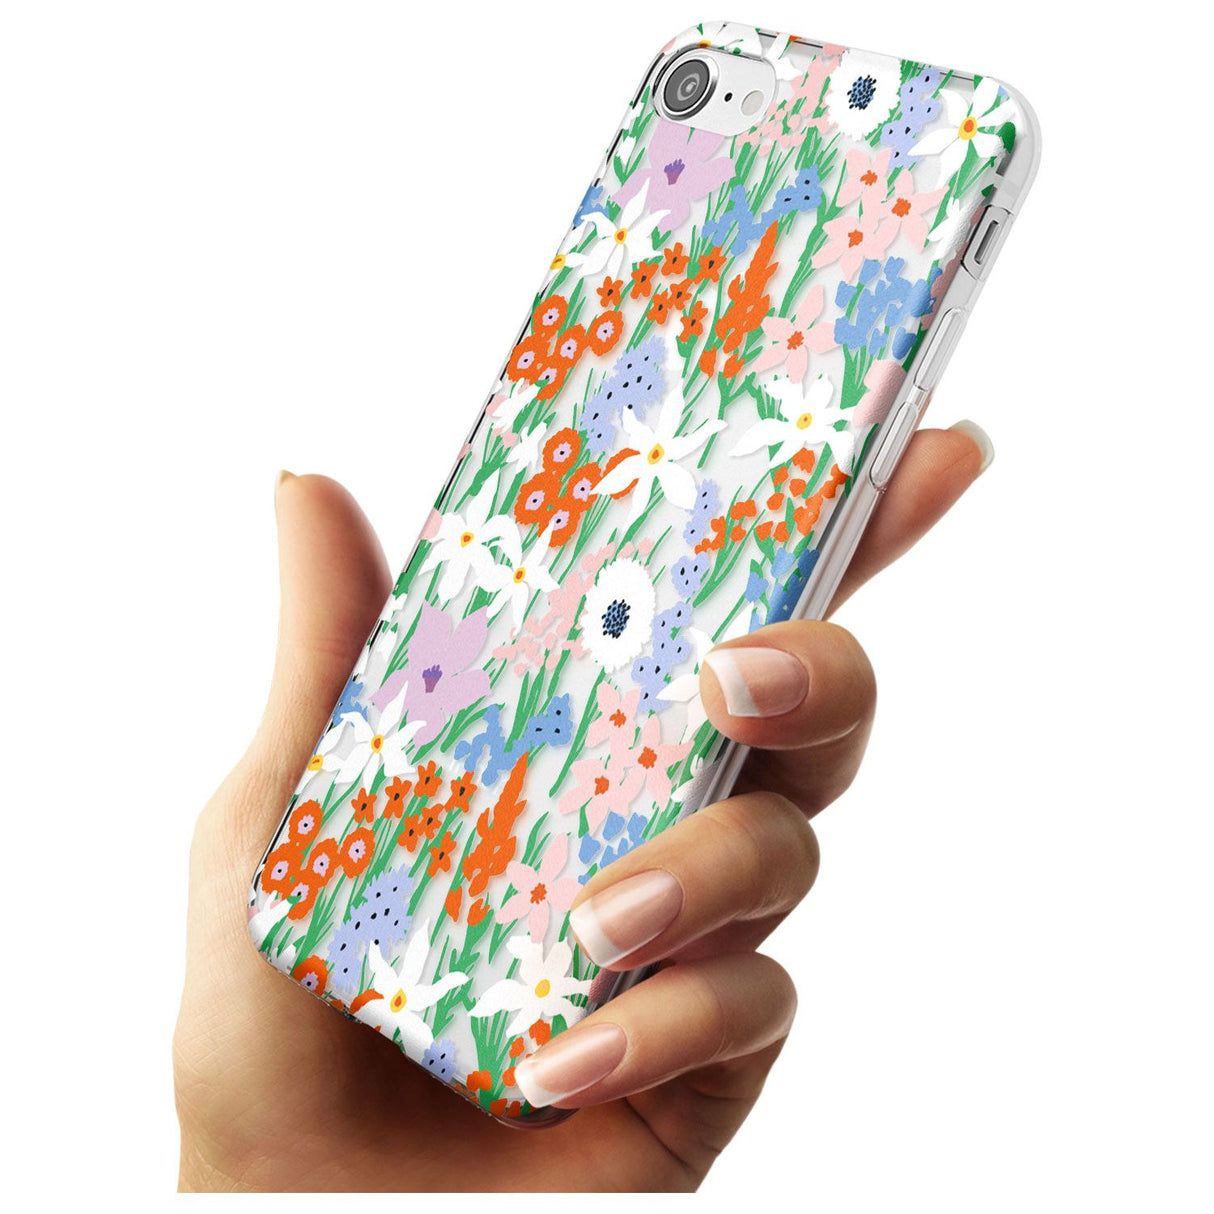 Springtime Meadow: Transparent Black Impact Phone Case for iPhone SE 8 7 Plus